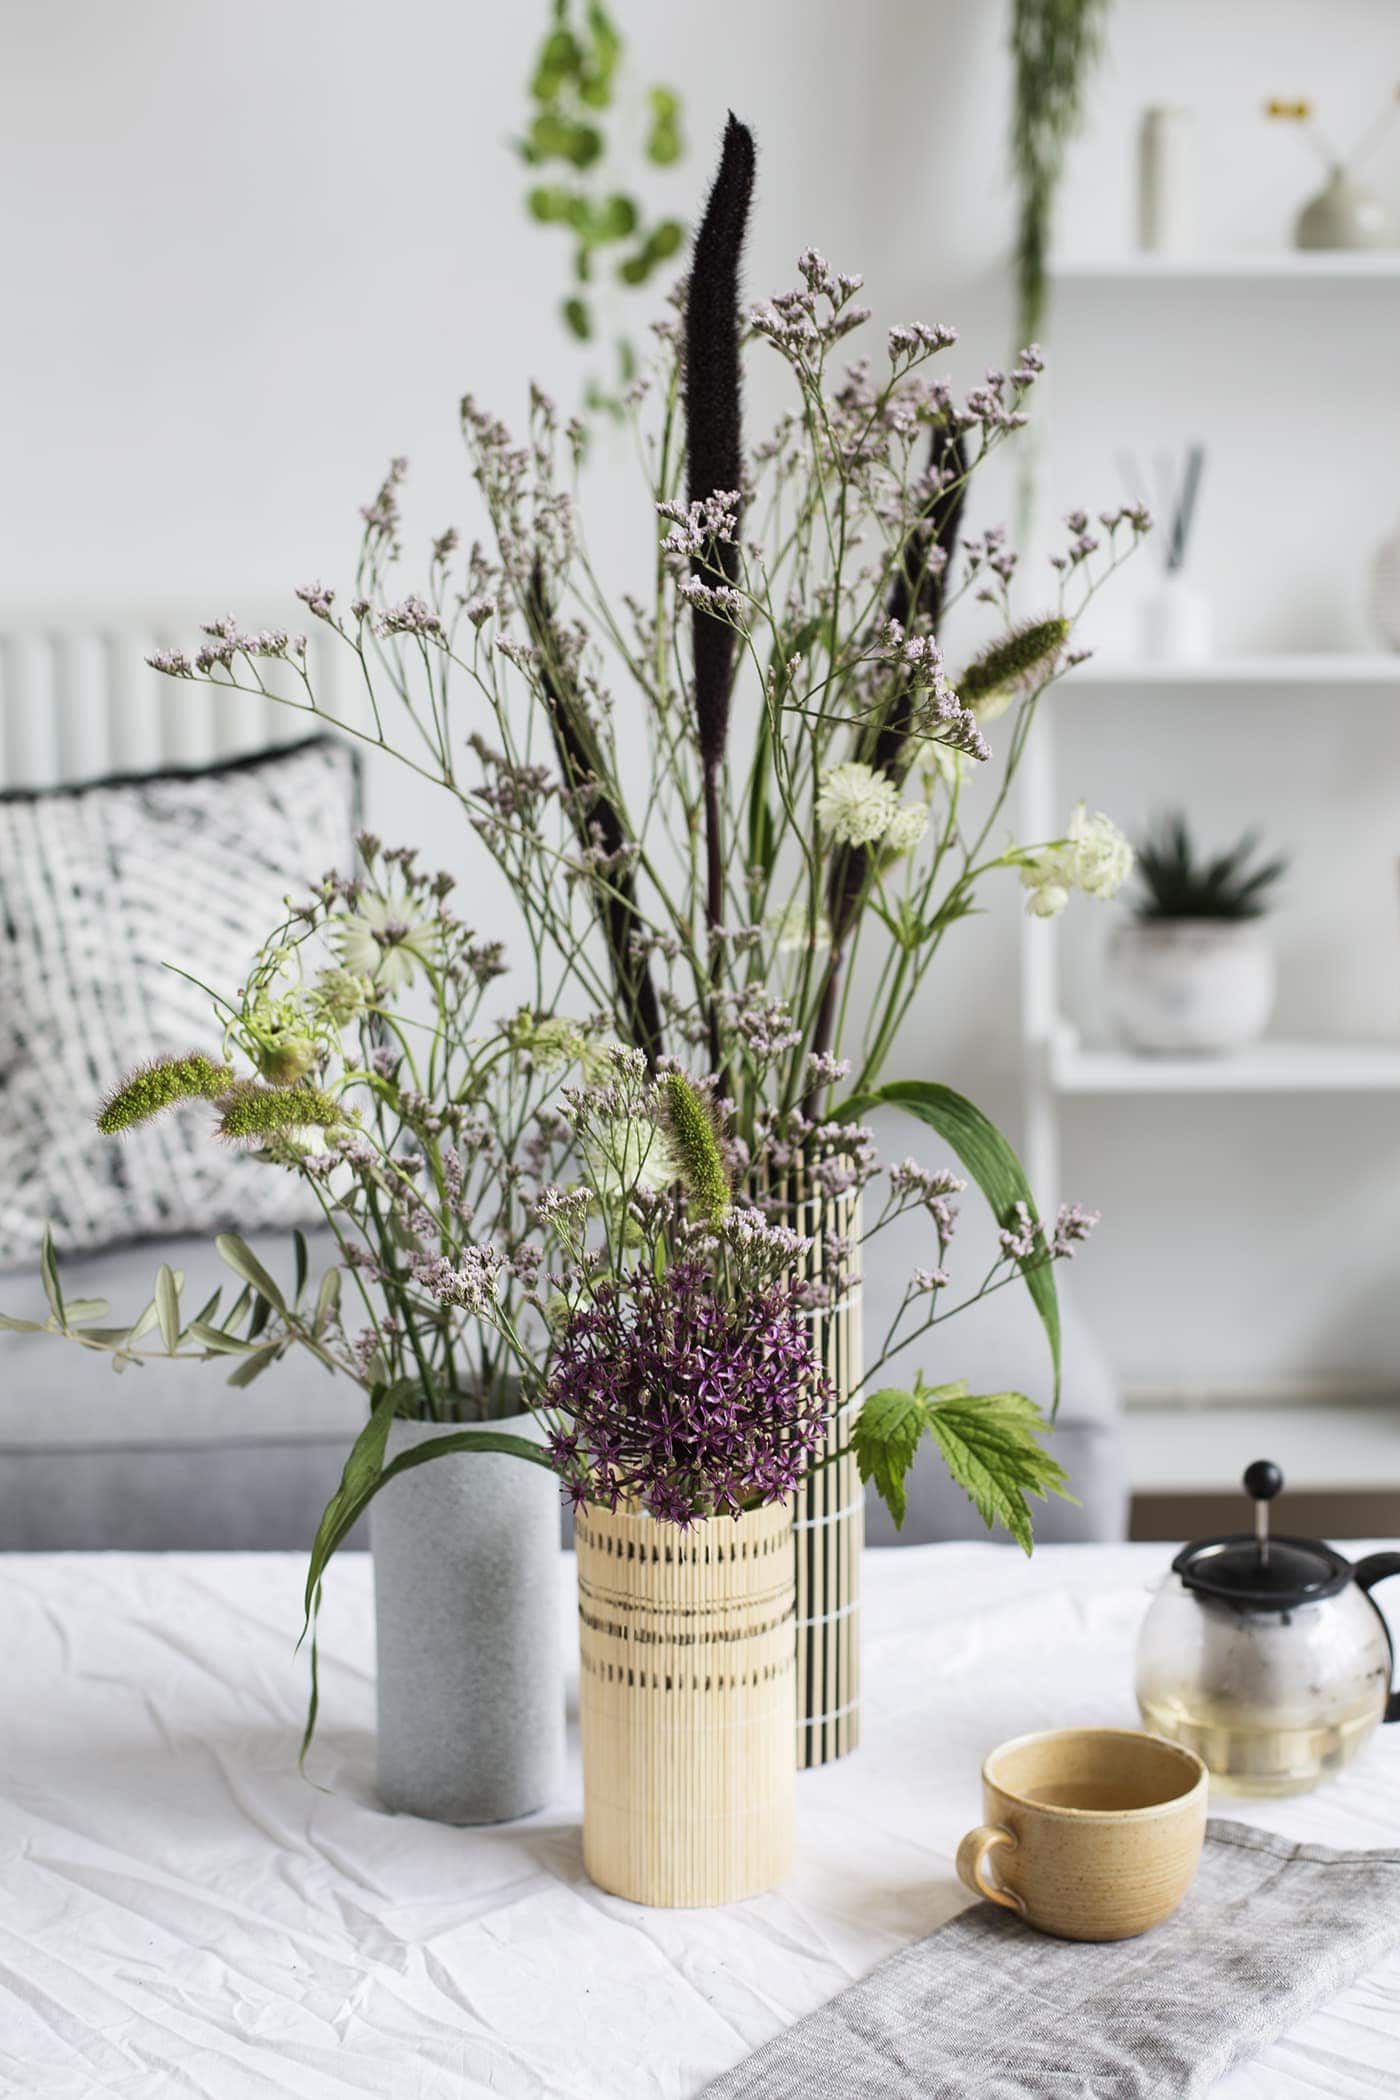 DIY Decorative Vases with Shurgard